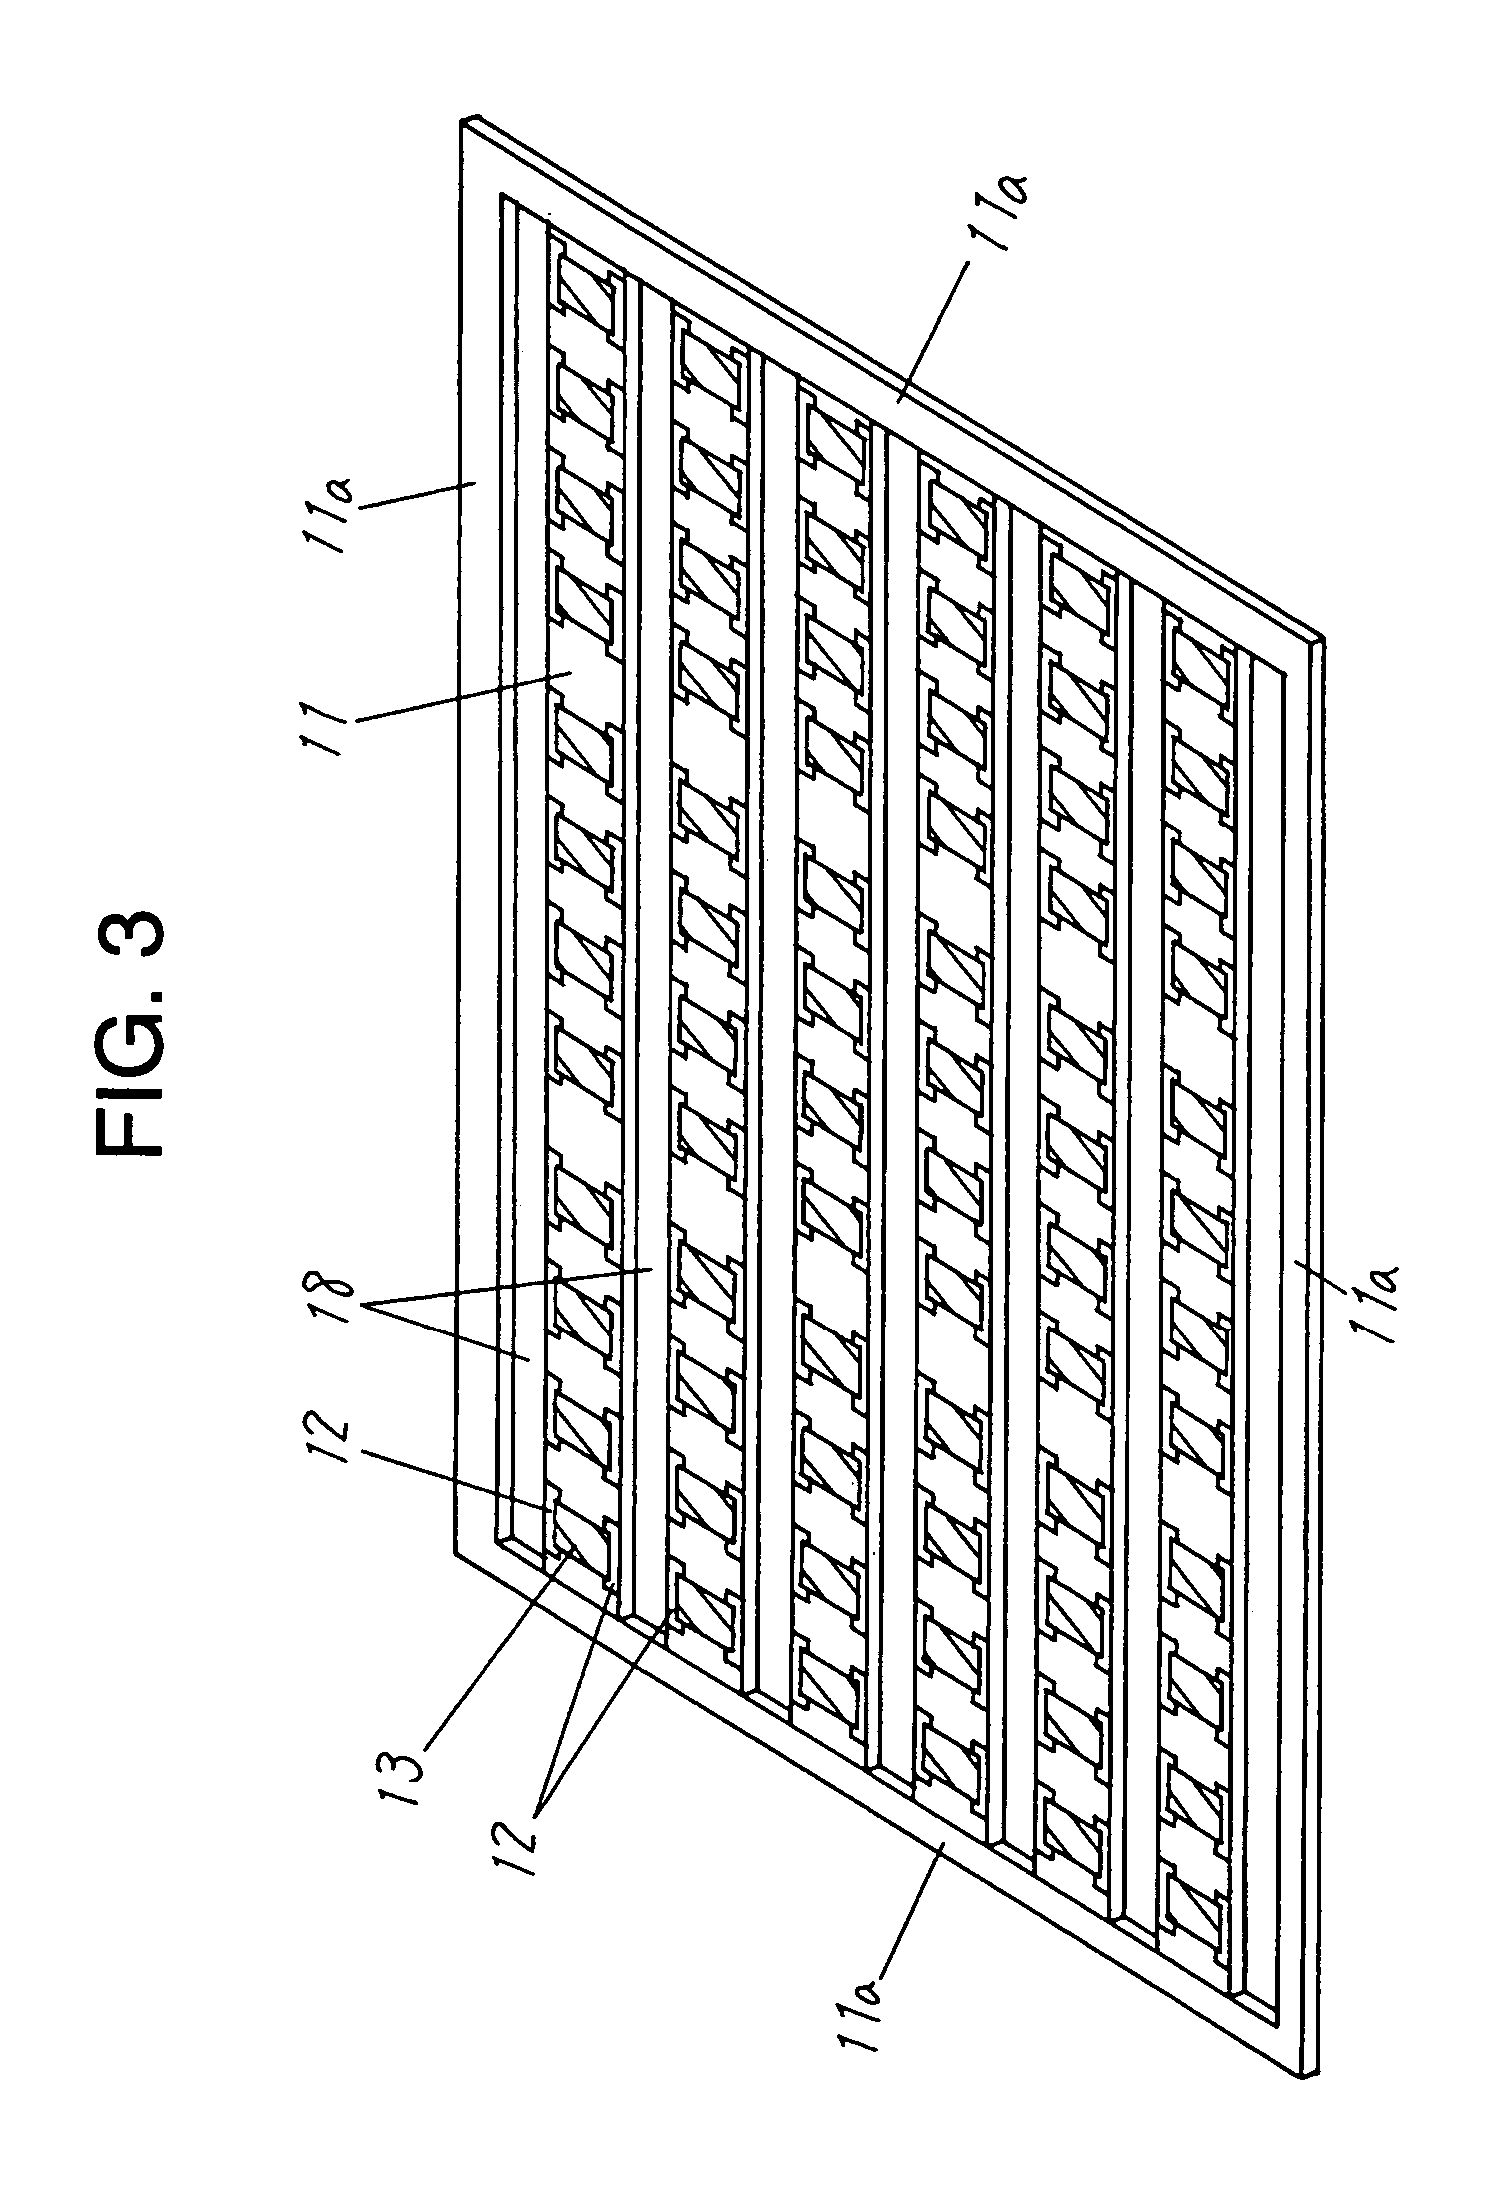 Method for manufacturing chip resistor